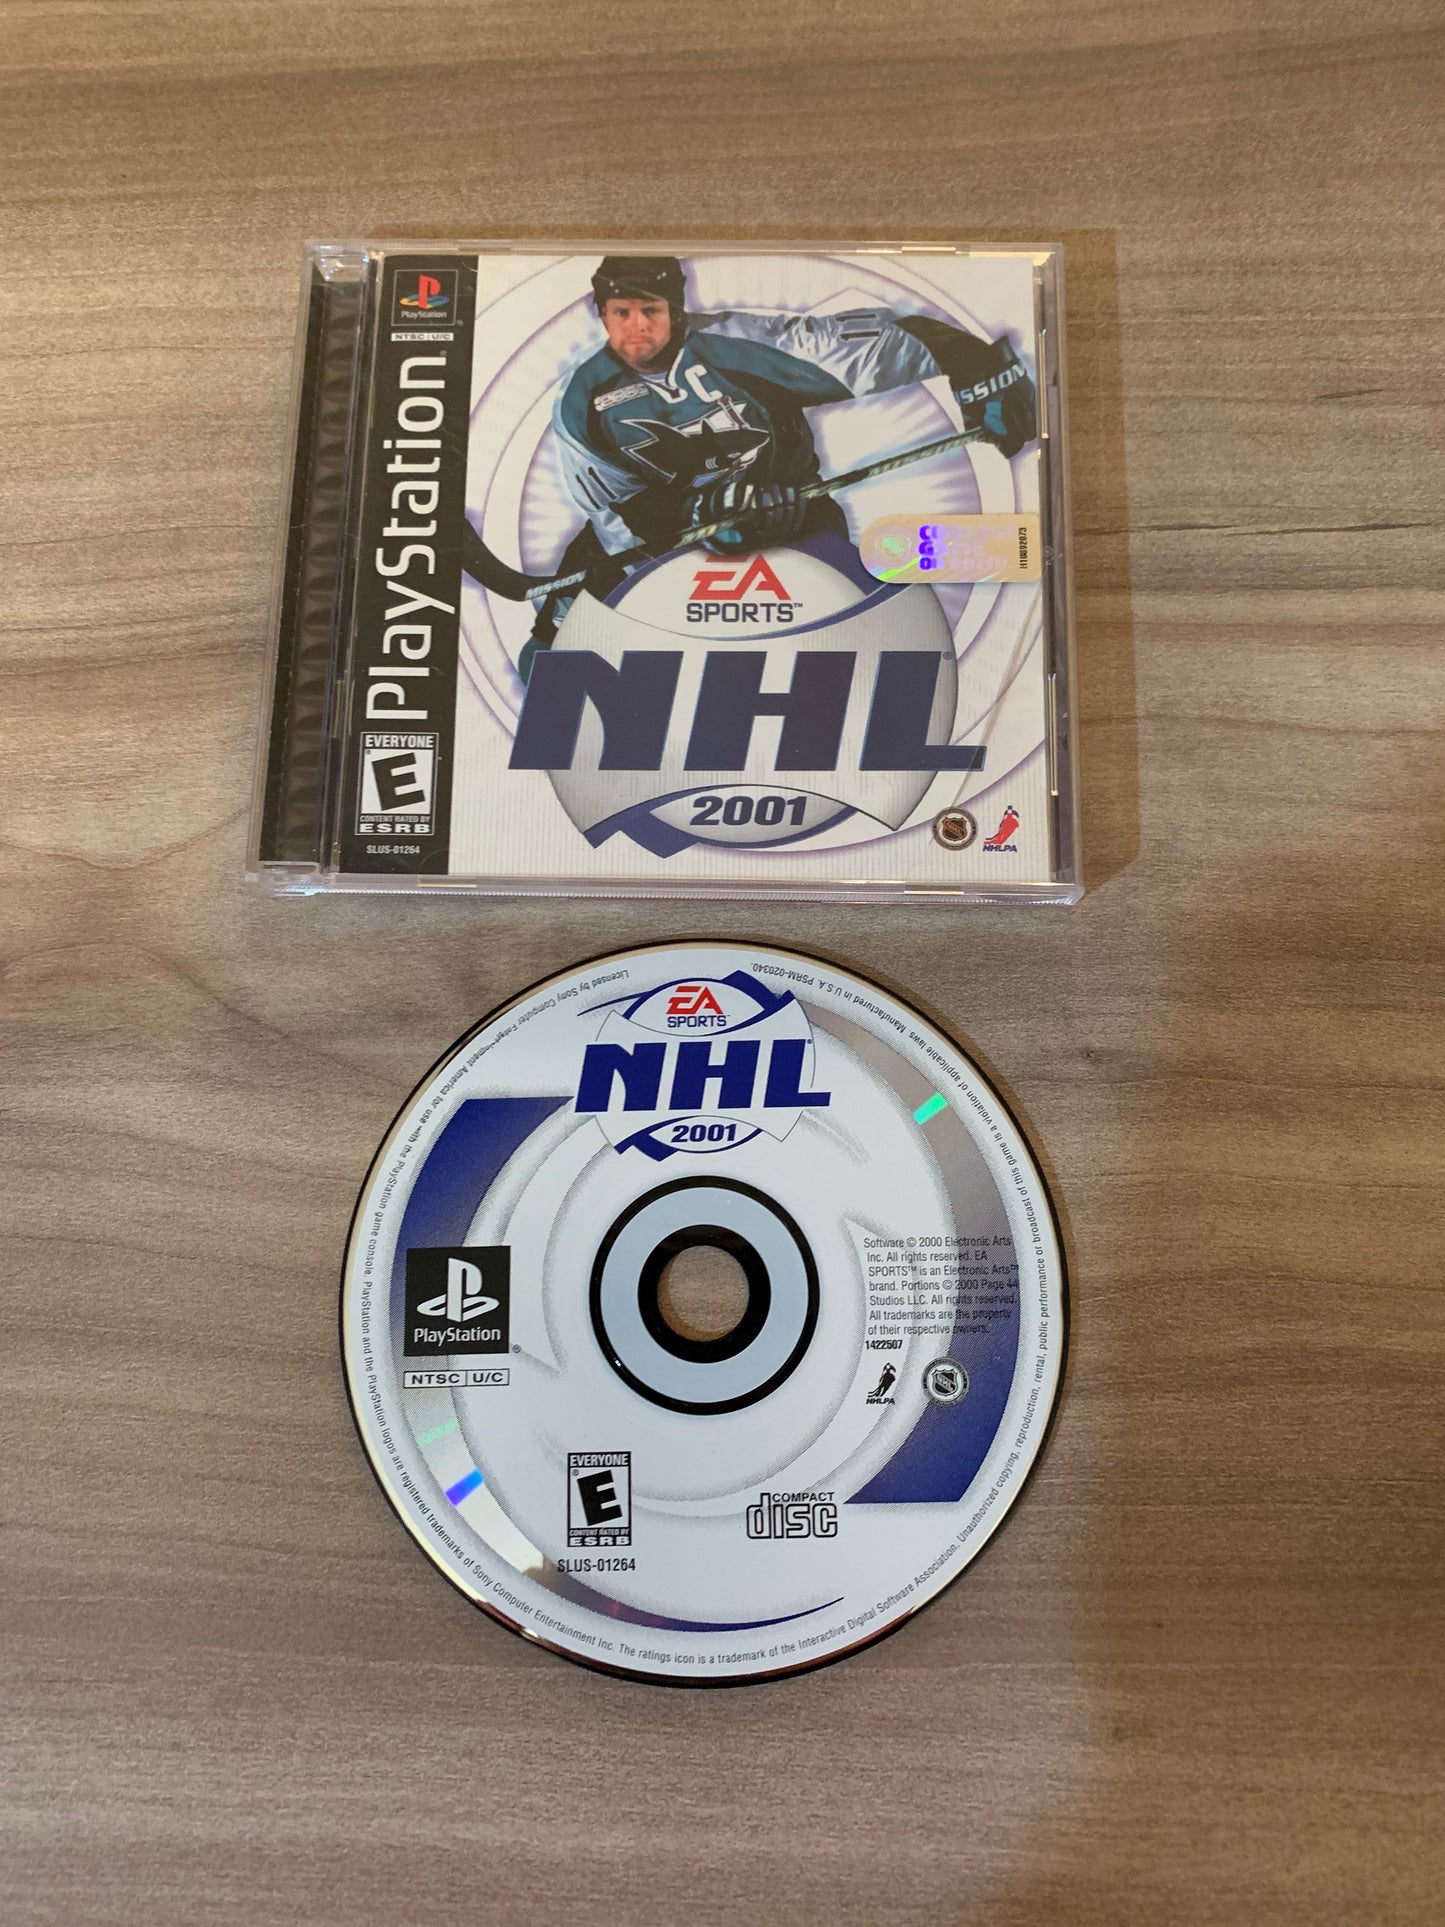 PiXEL-RETRO.COM : SONY PLAYSTATION (PS1) COMPLETE CIB BOX MANUAL GAME NHL 2001